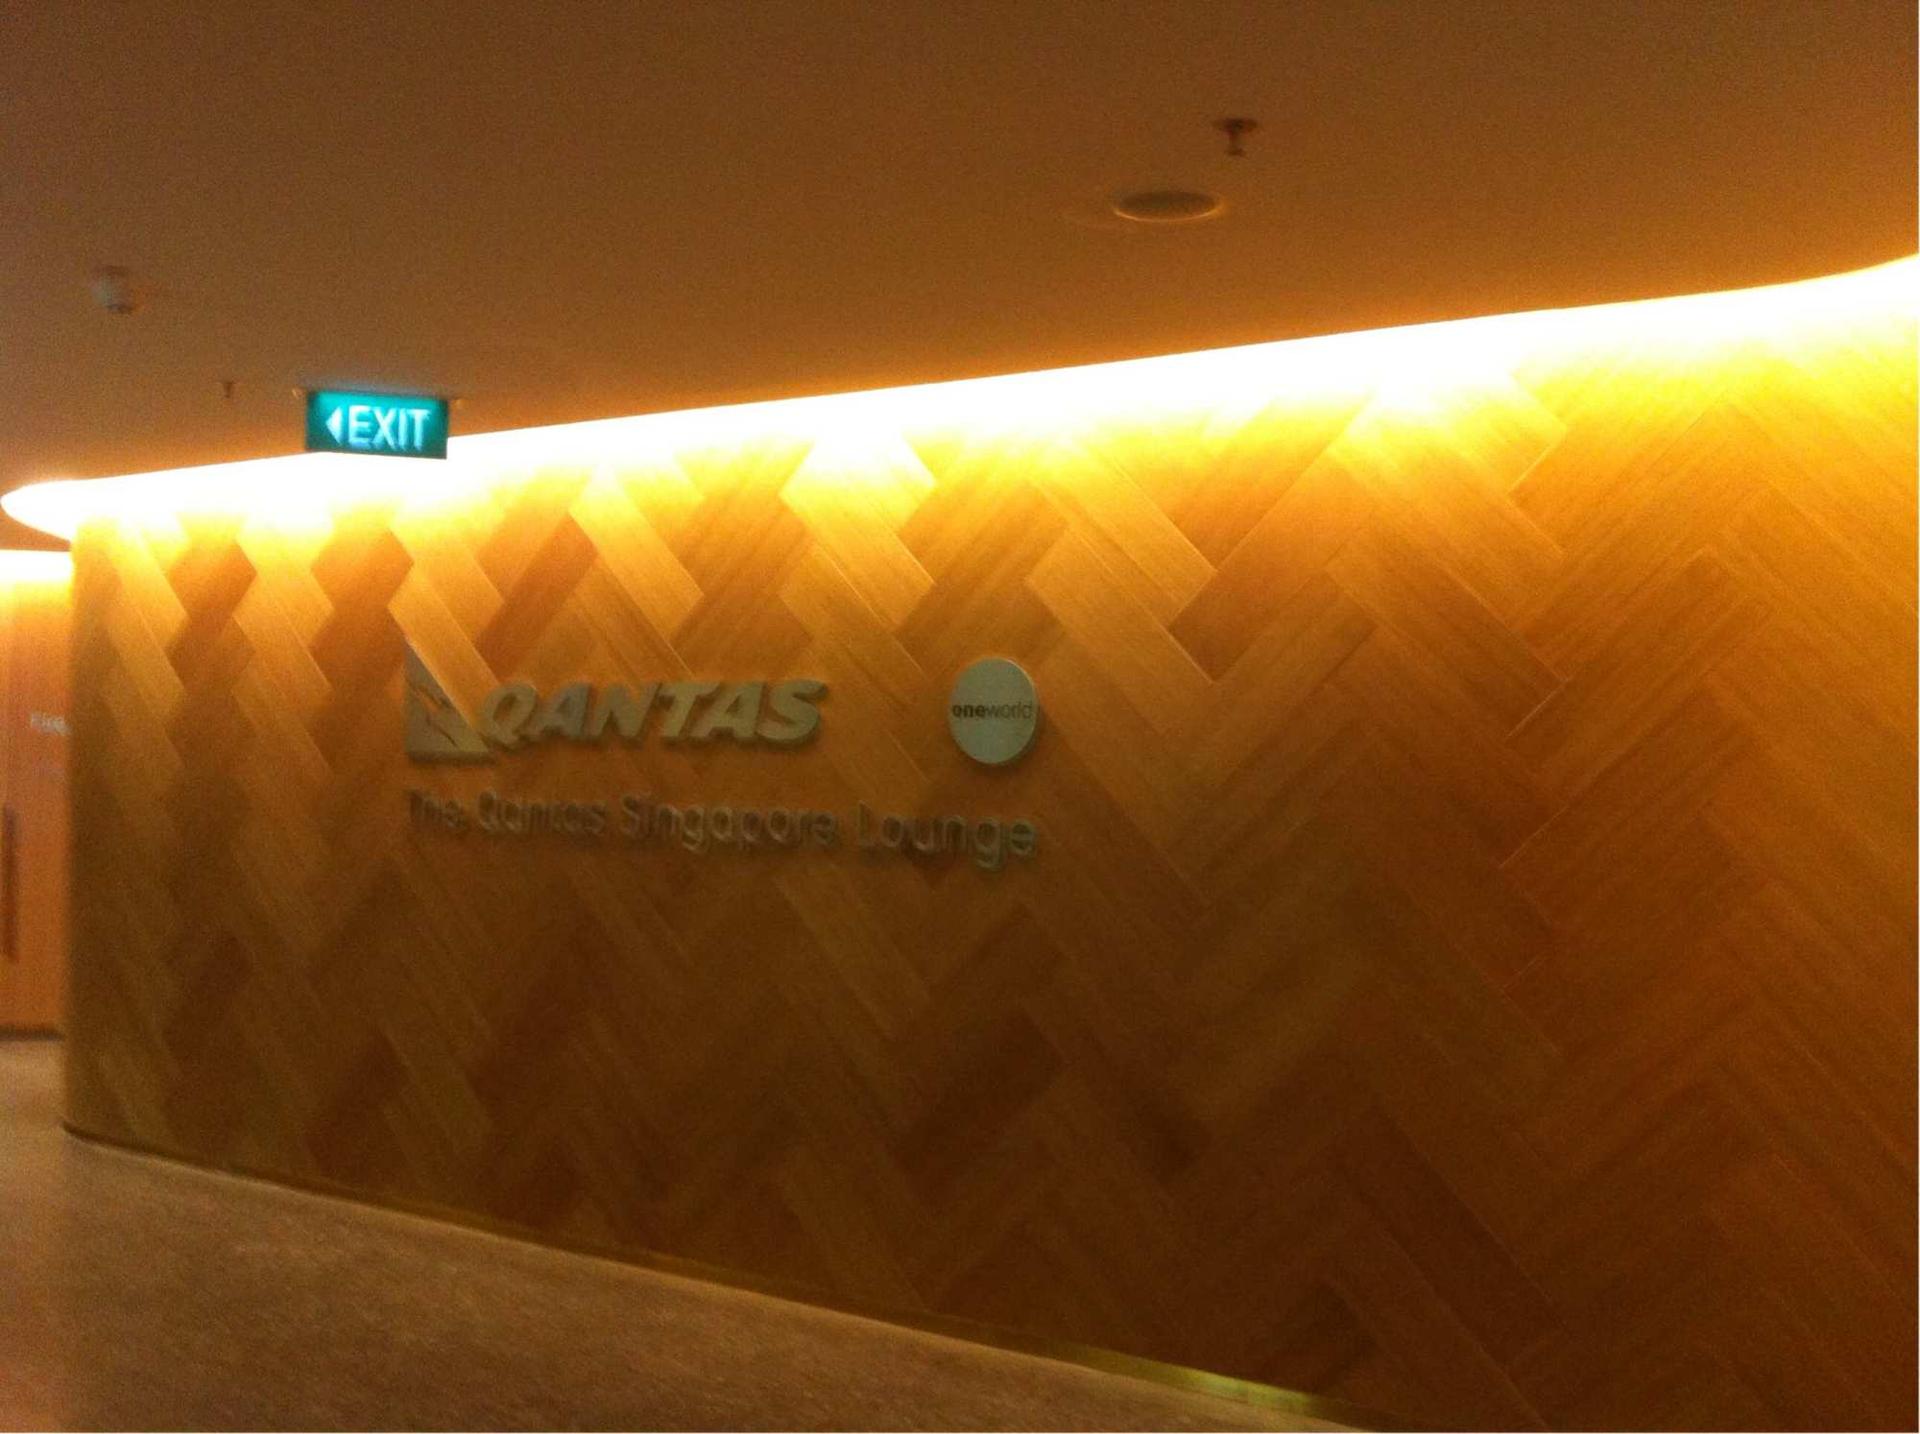 The Qantas Singapore Lounge image 6 of 49